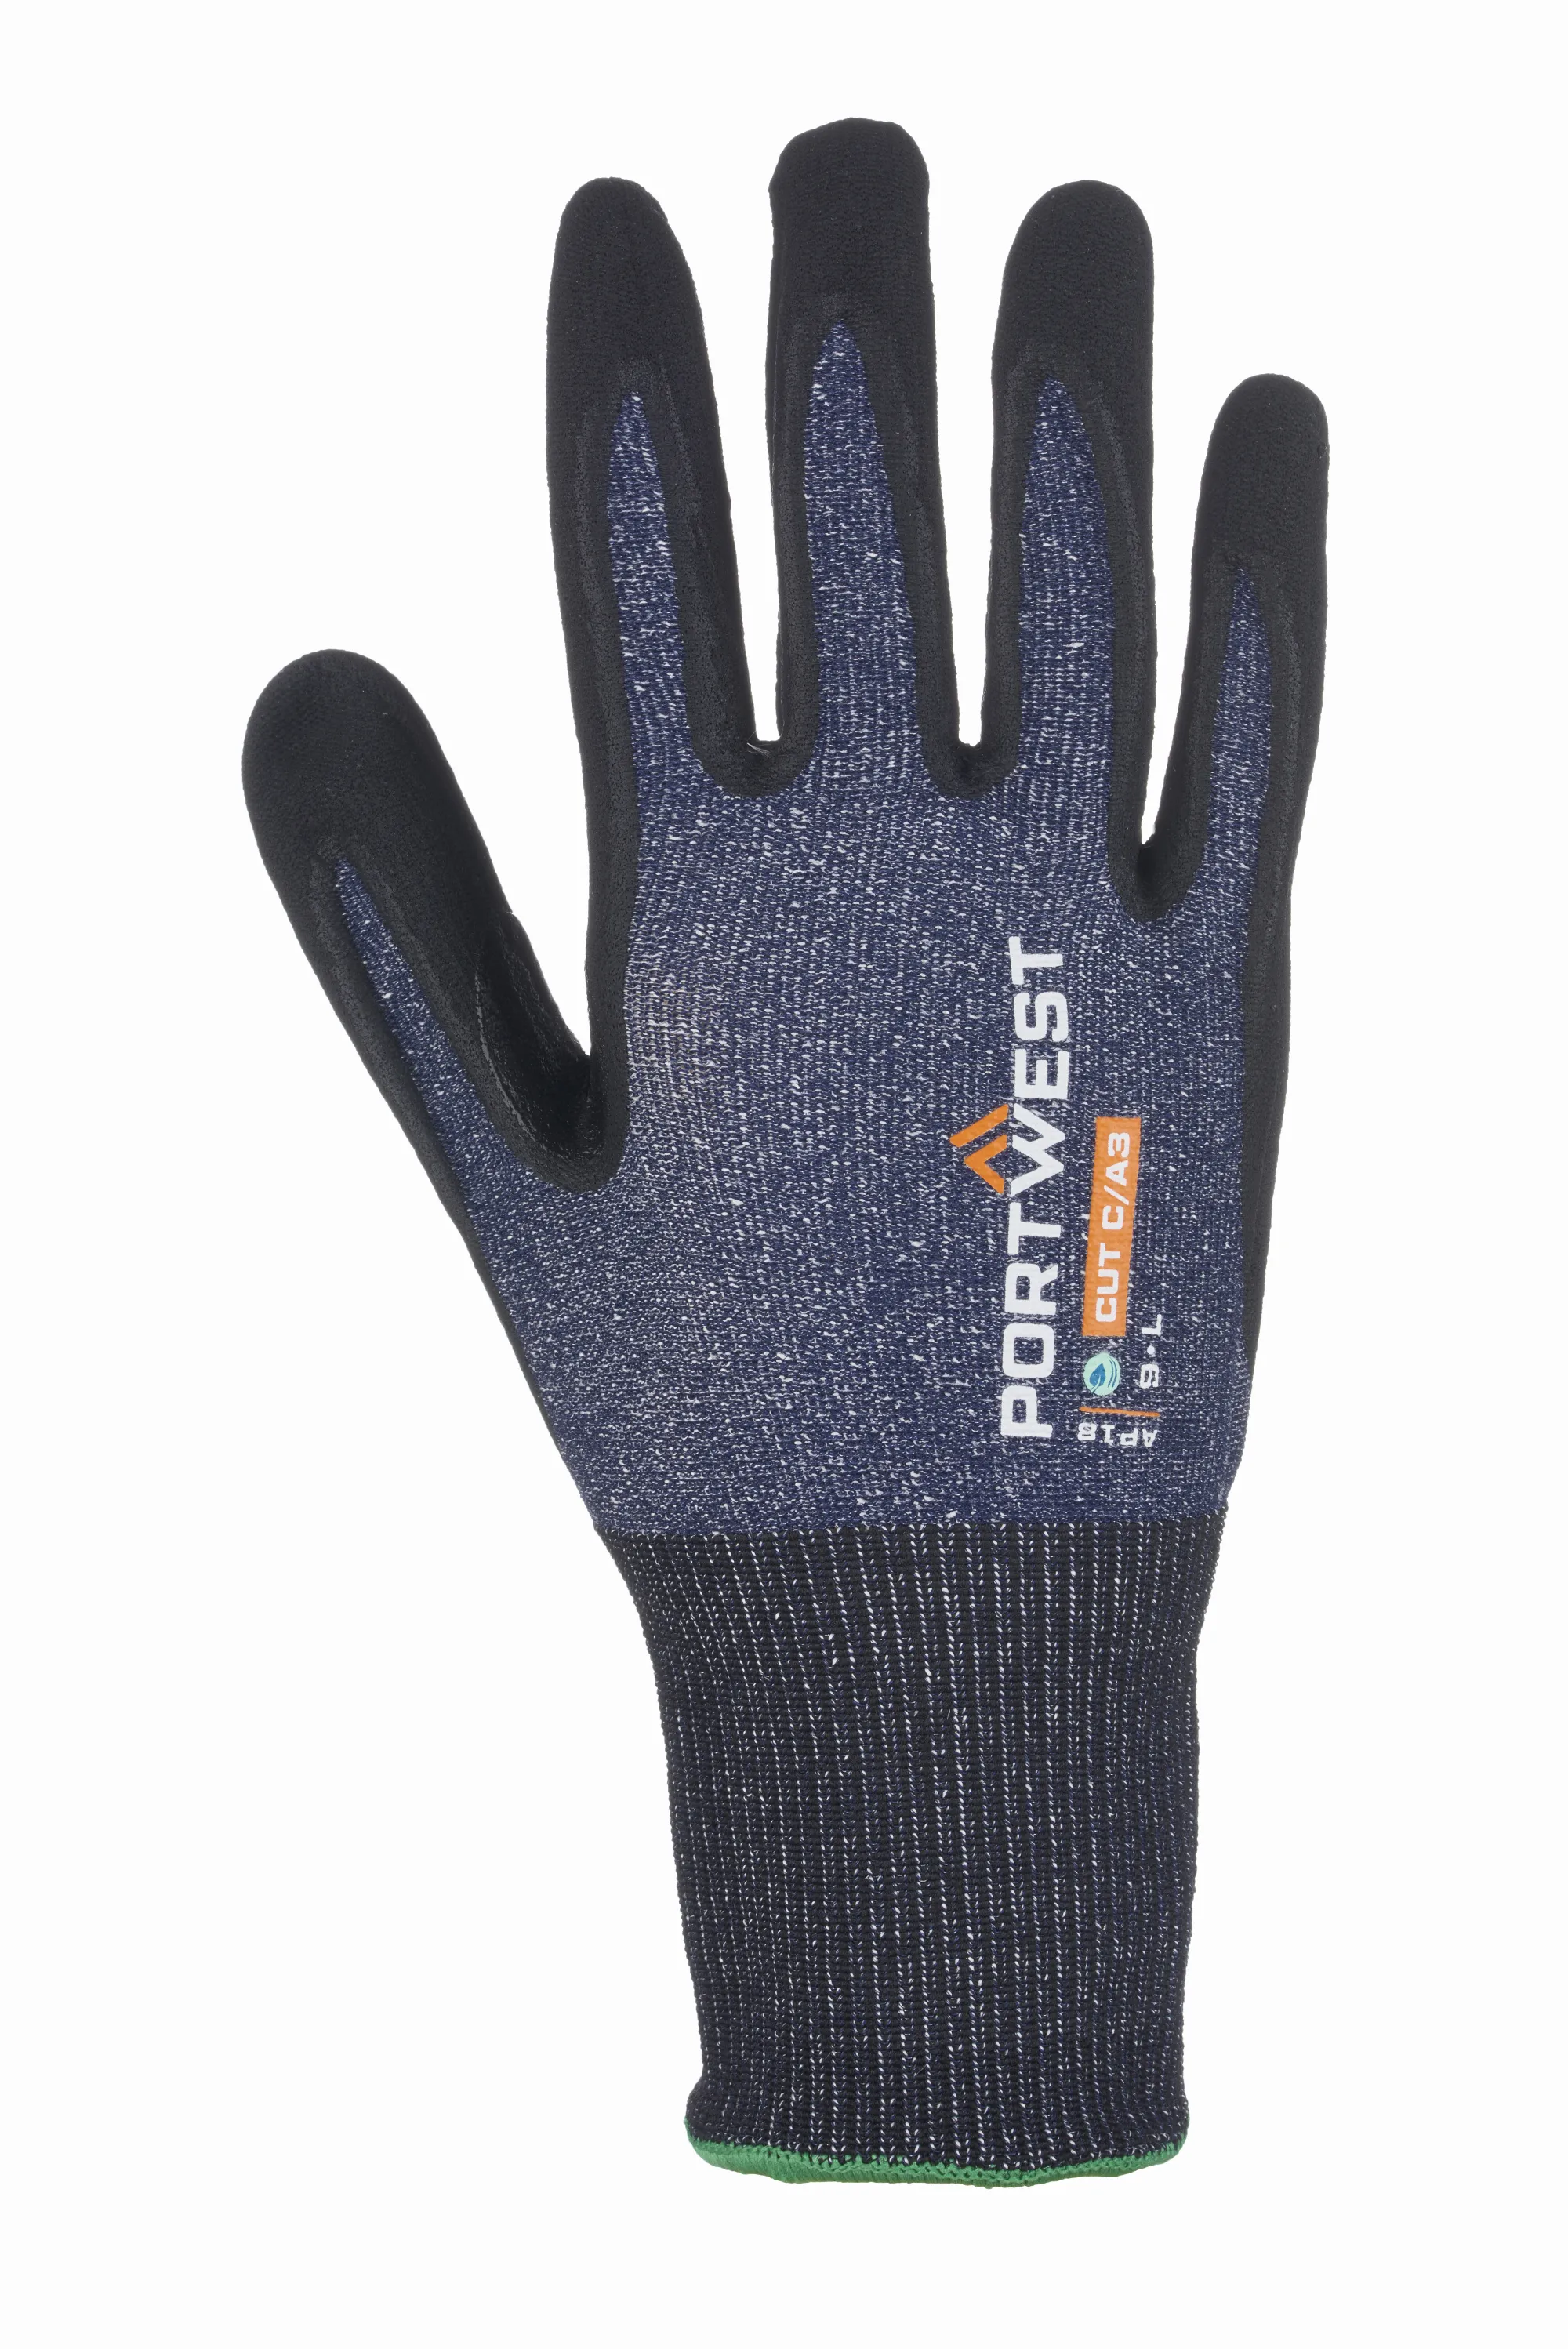 Handschuhe PORTWEST SG Cut C15 Eco (12 Paar)